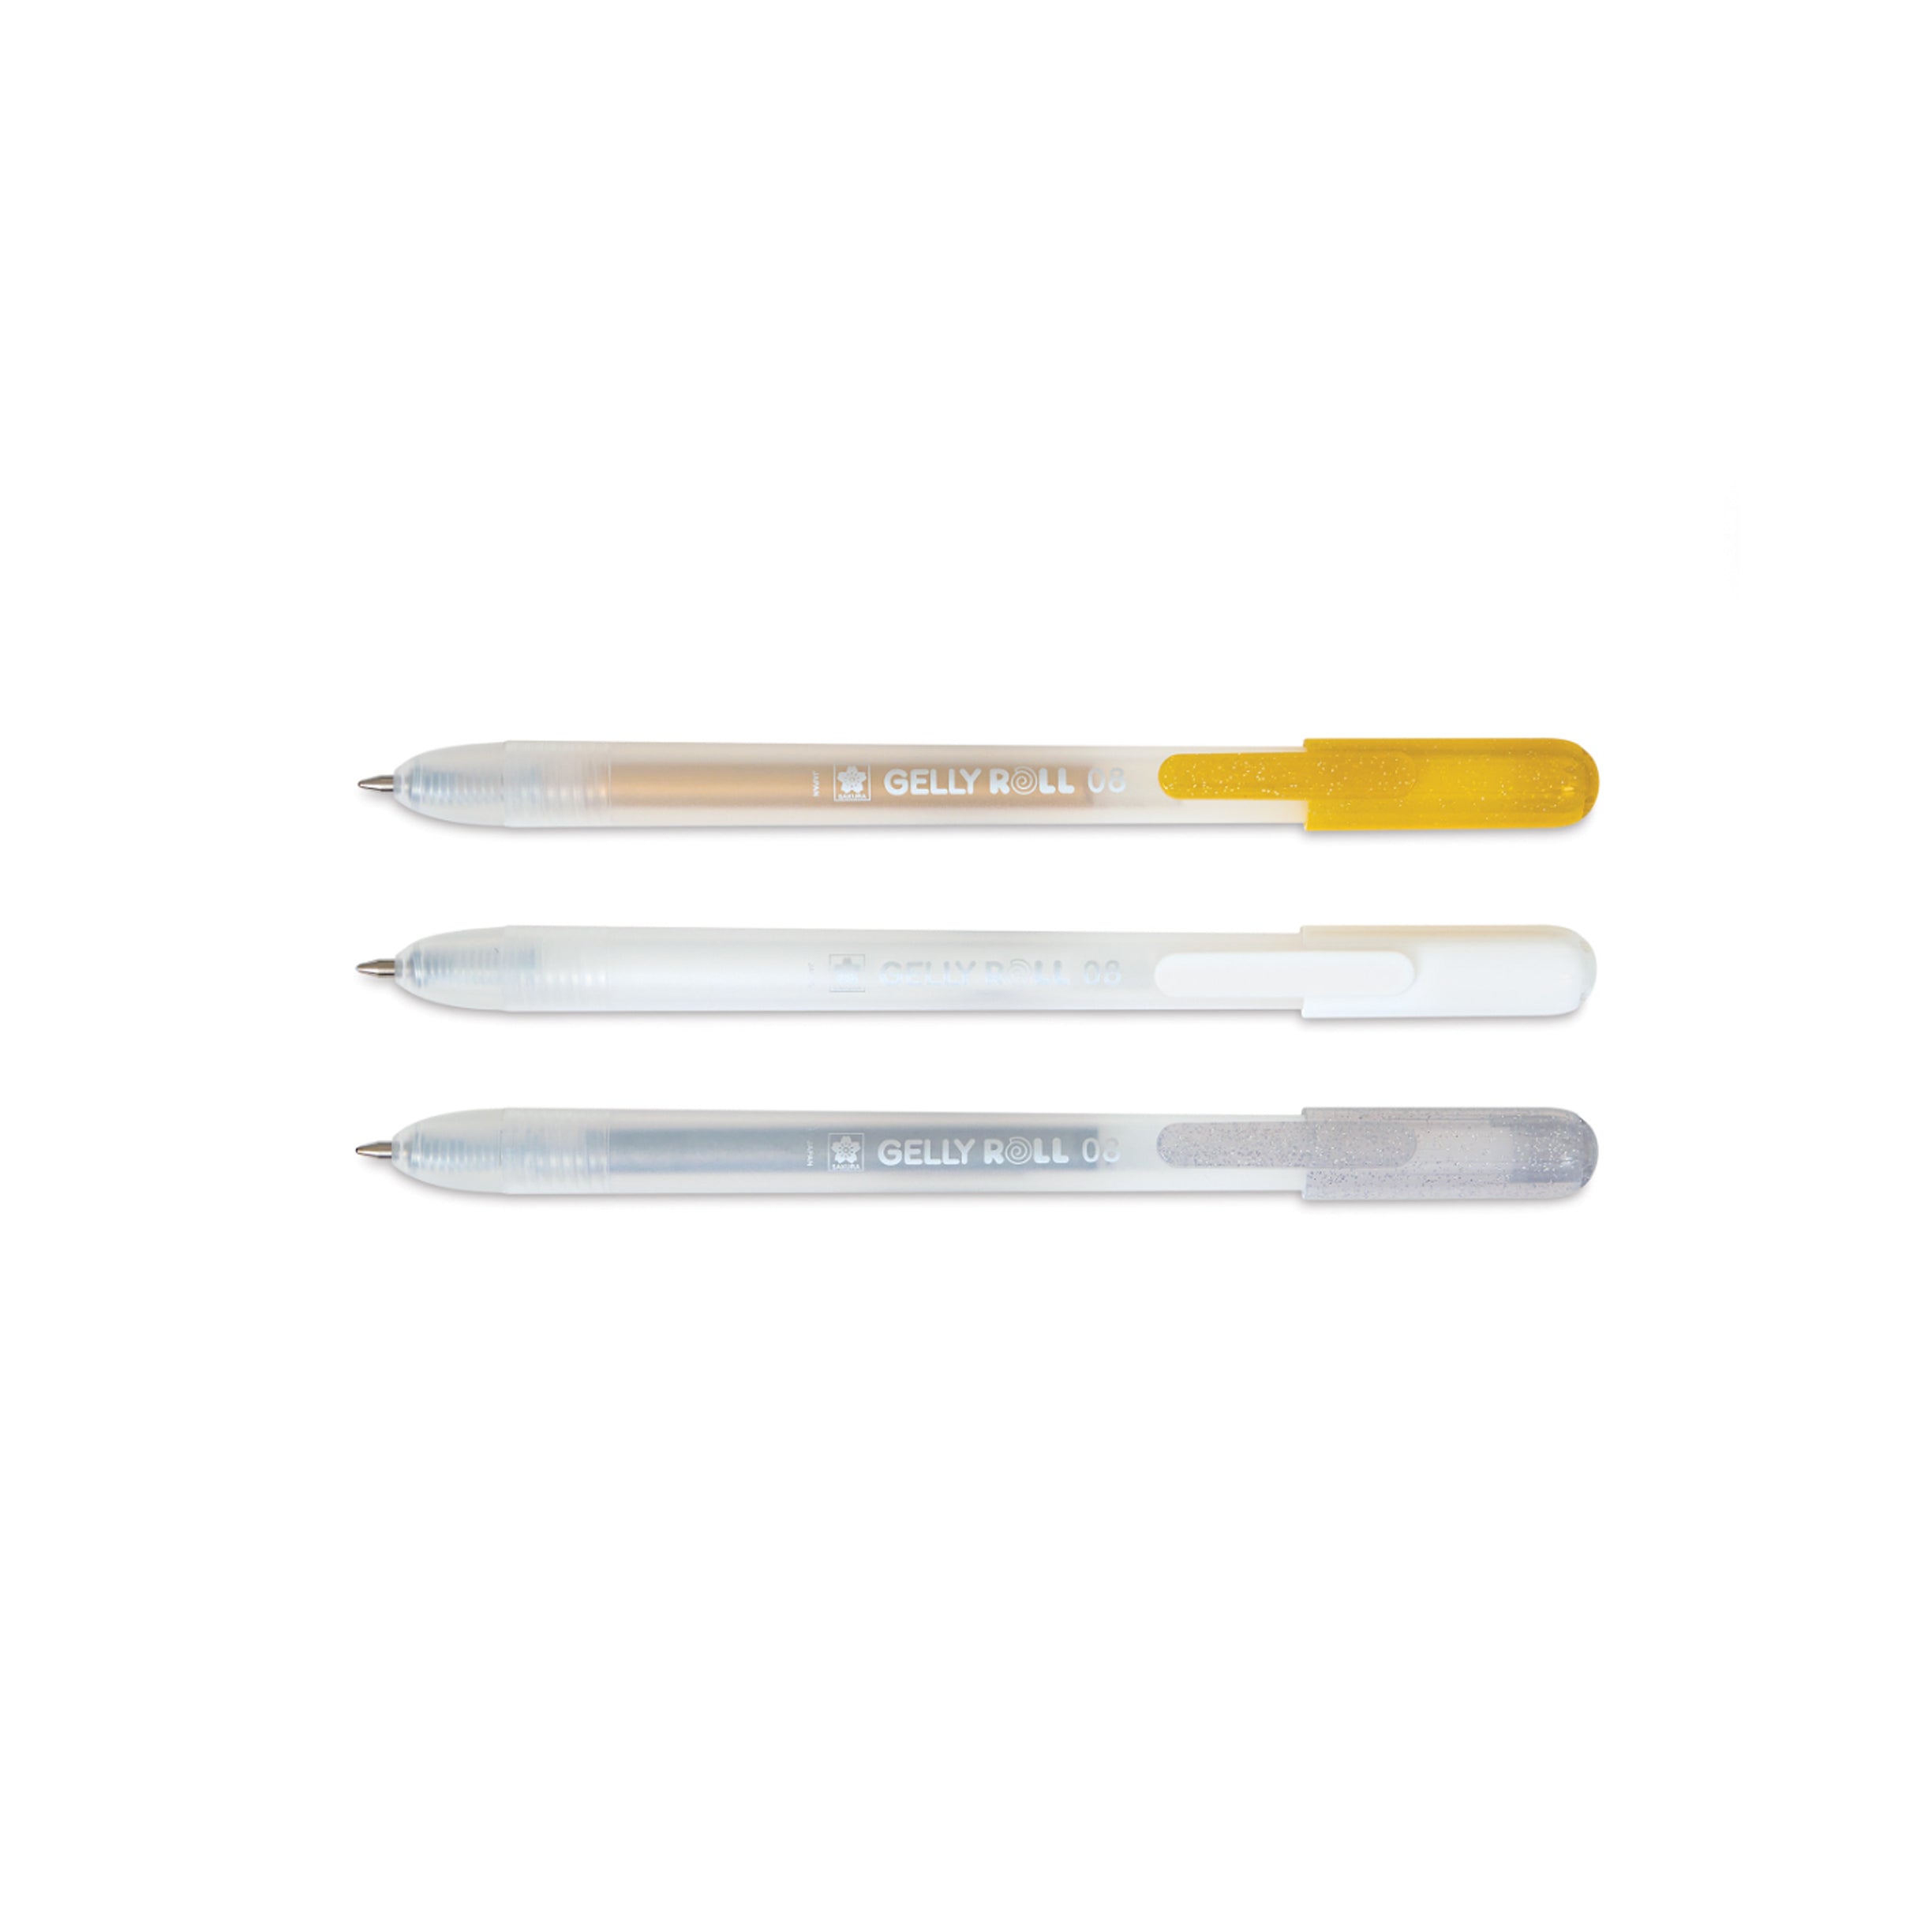 Sakura Gelly Roll Retractable Craft Pen Set - Assorted, Medium Tip, Set of 3